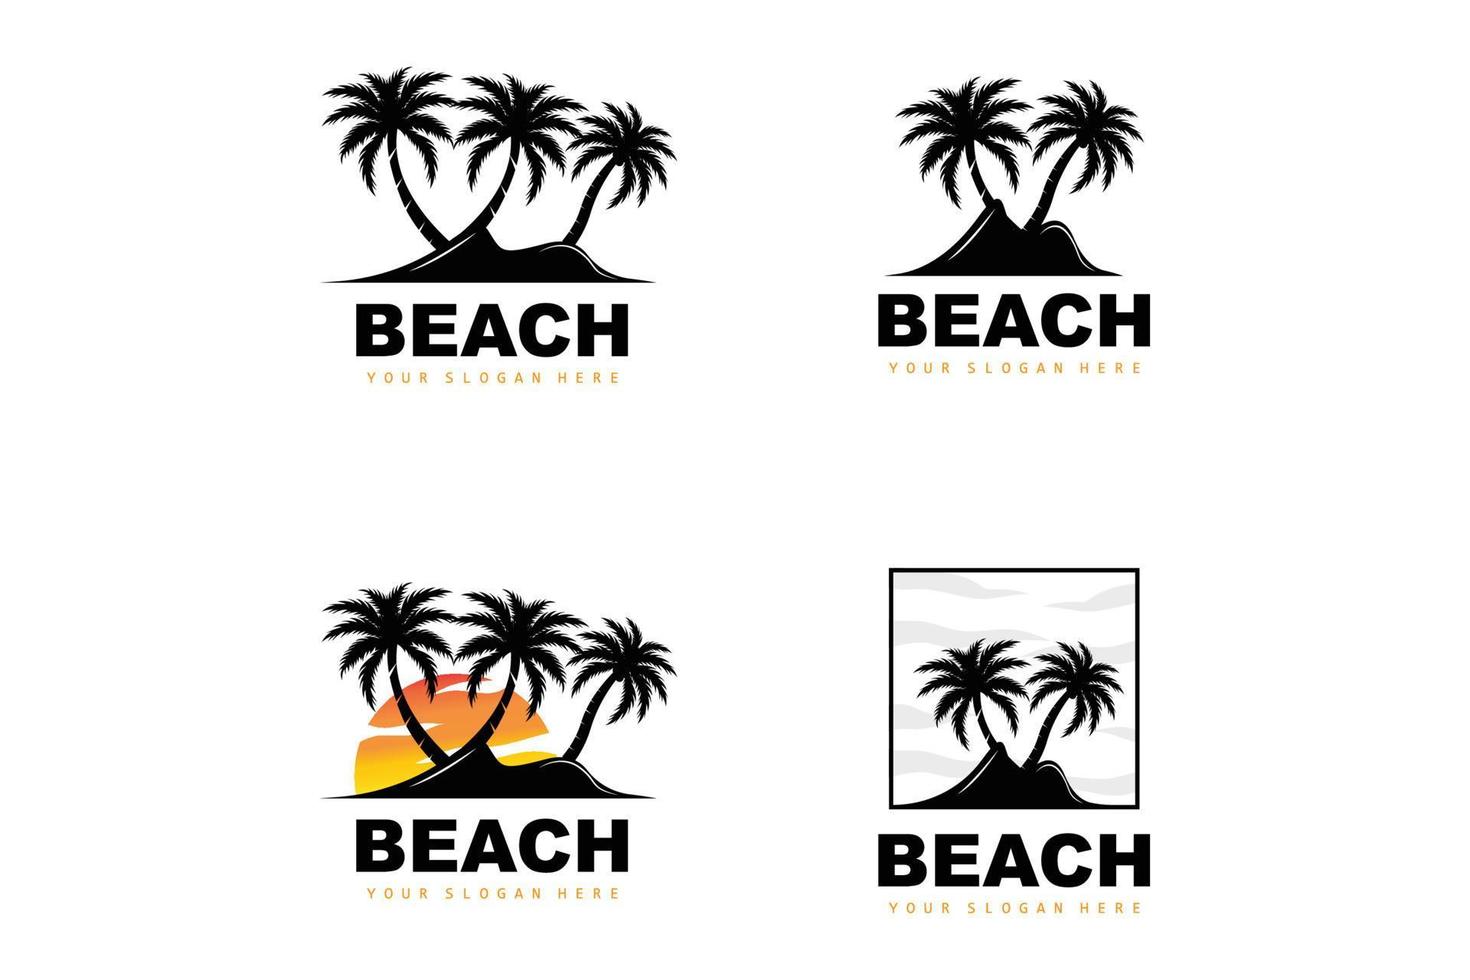 kokosnussbaum-logo mit strandatmosphäre, strandpflanzenvektor, sonnenuntergangsansichtsdesign vektor